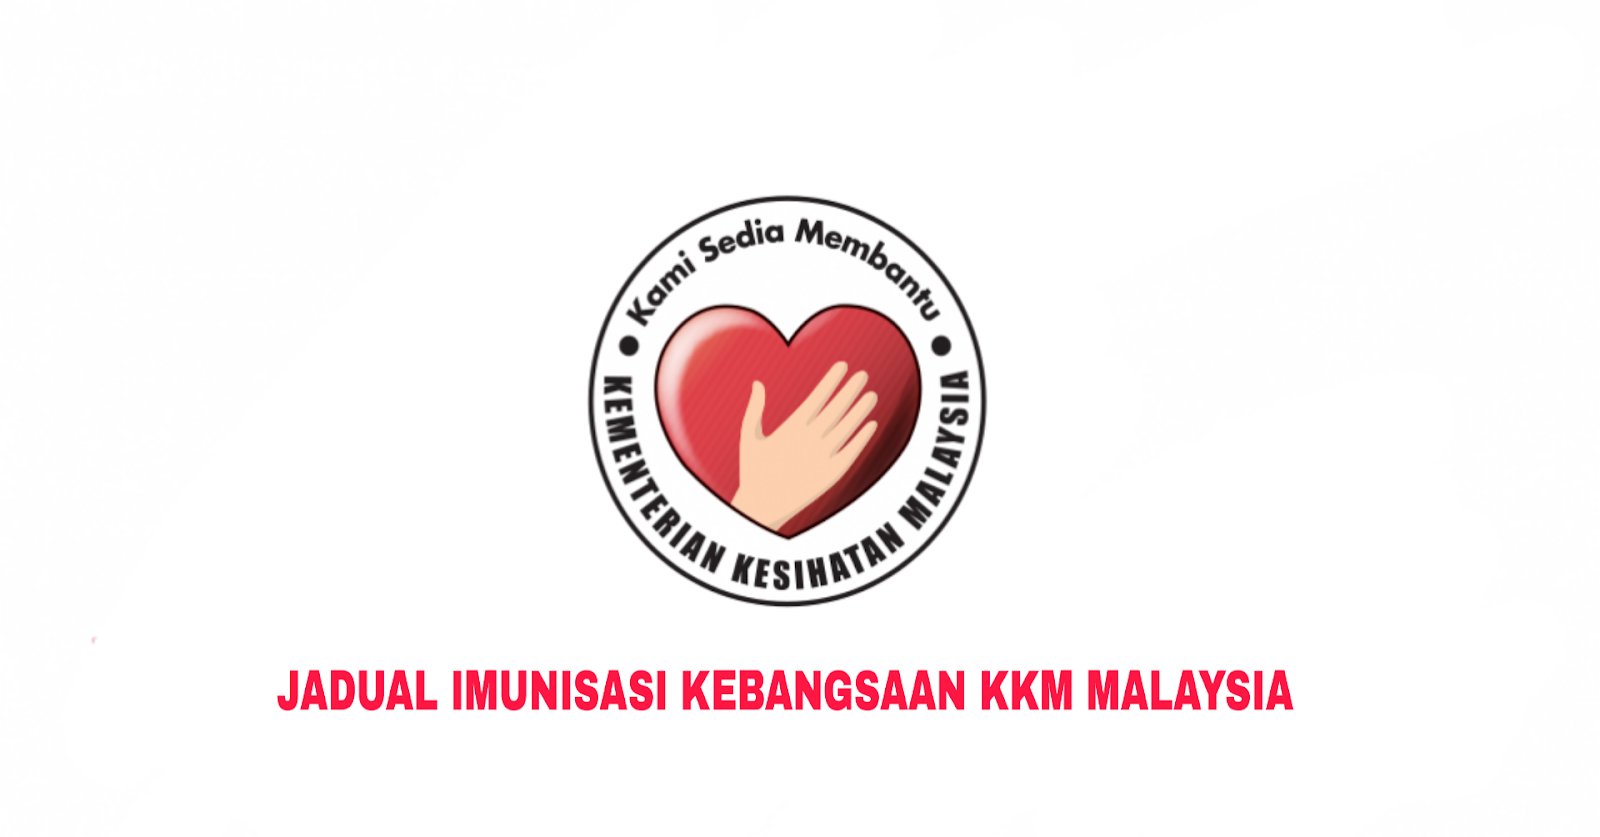 Jadual Imunisasi Kebangsaan KKM 2019 Malaysia